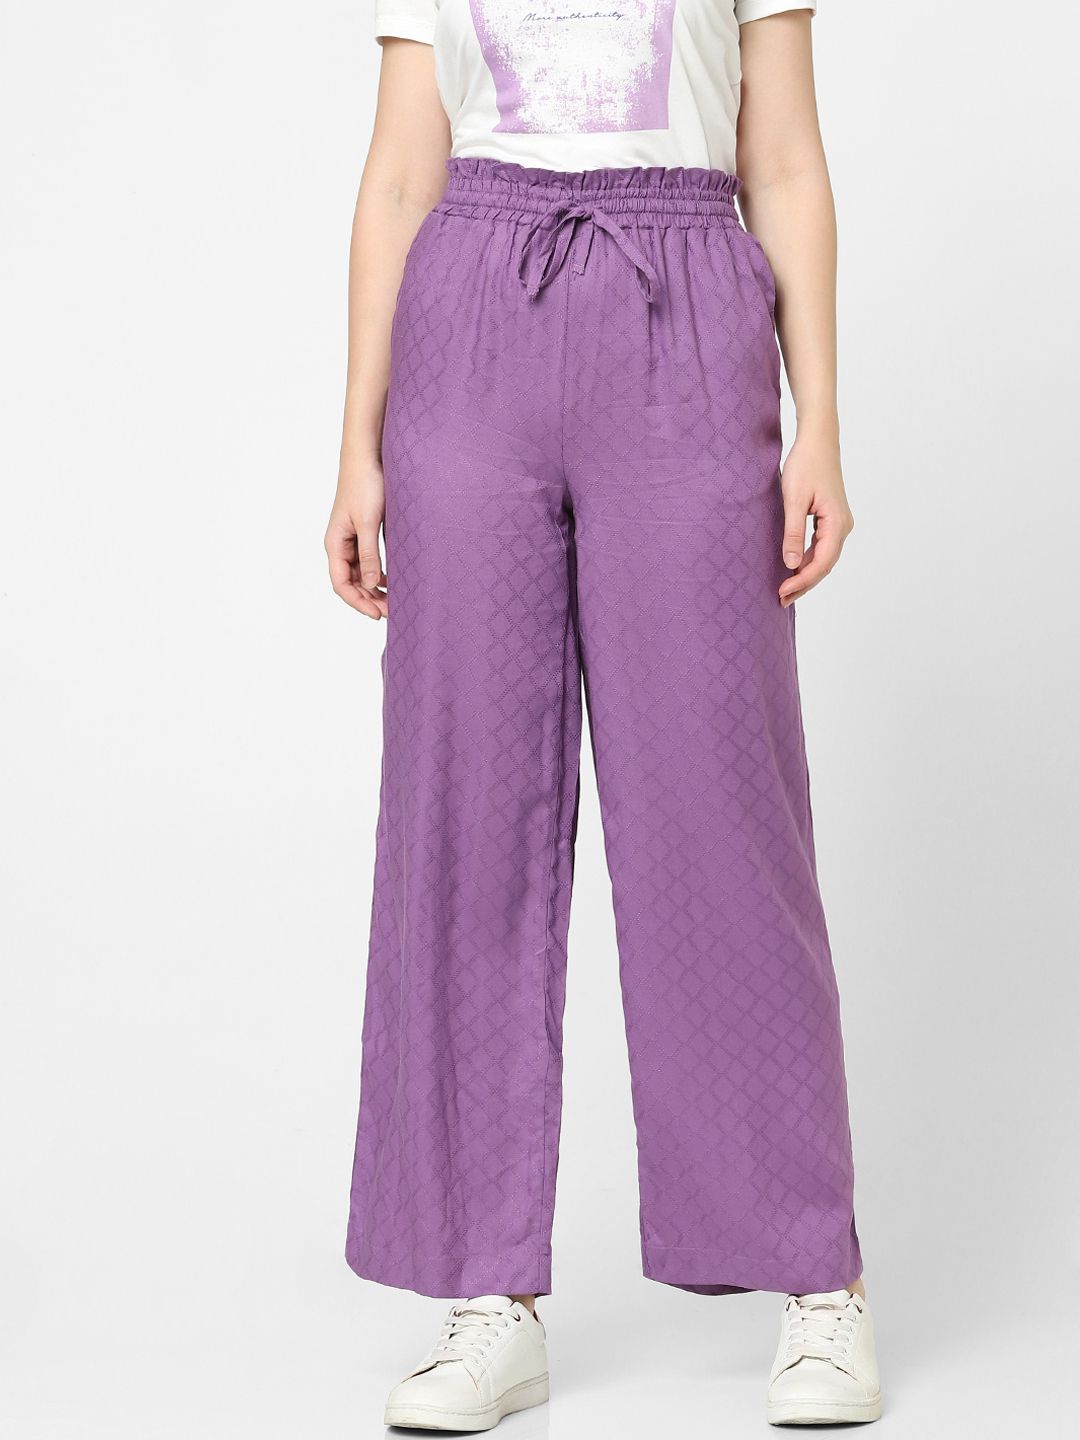 Vero Moda Women Purple High-Rise Pleated Trousers Price in India